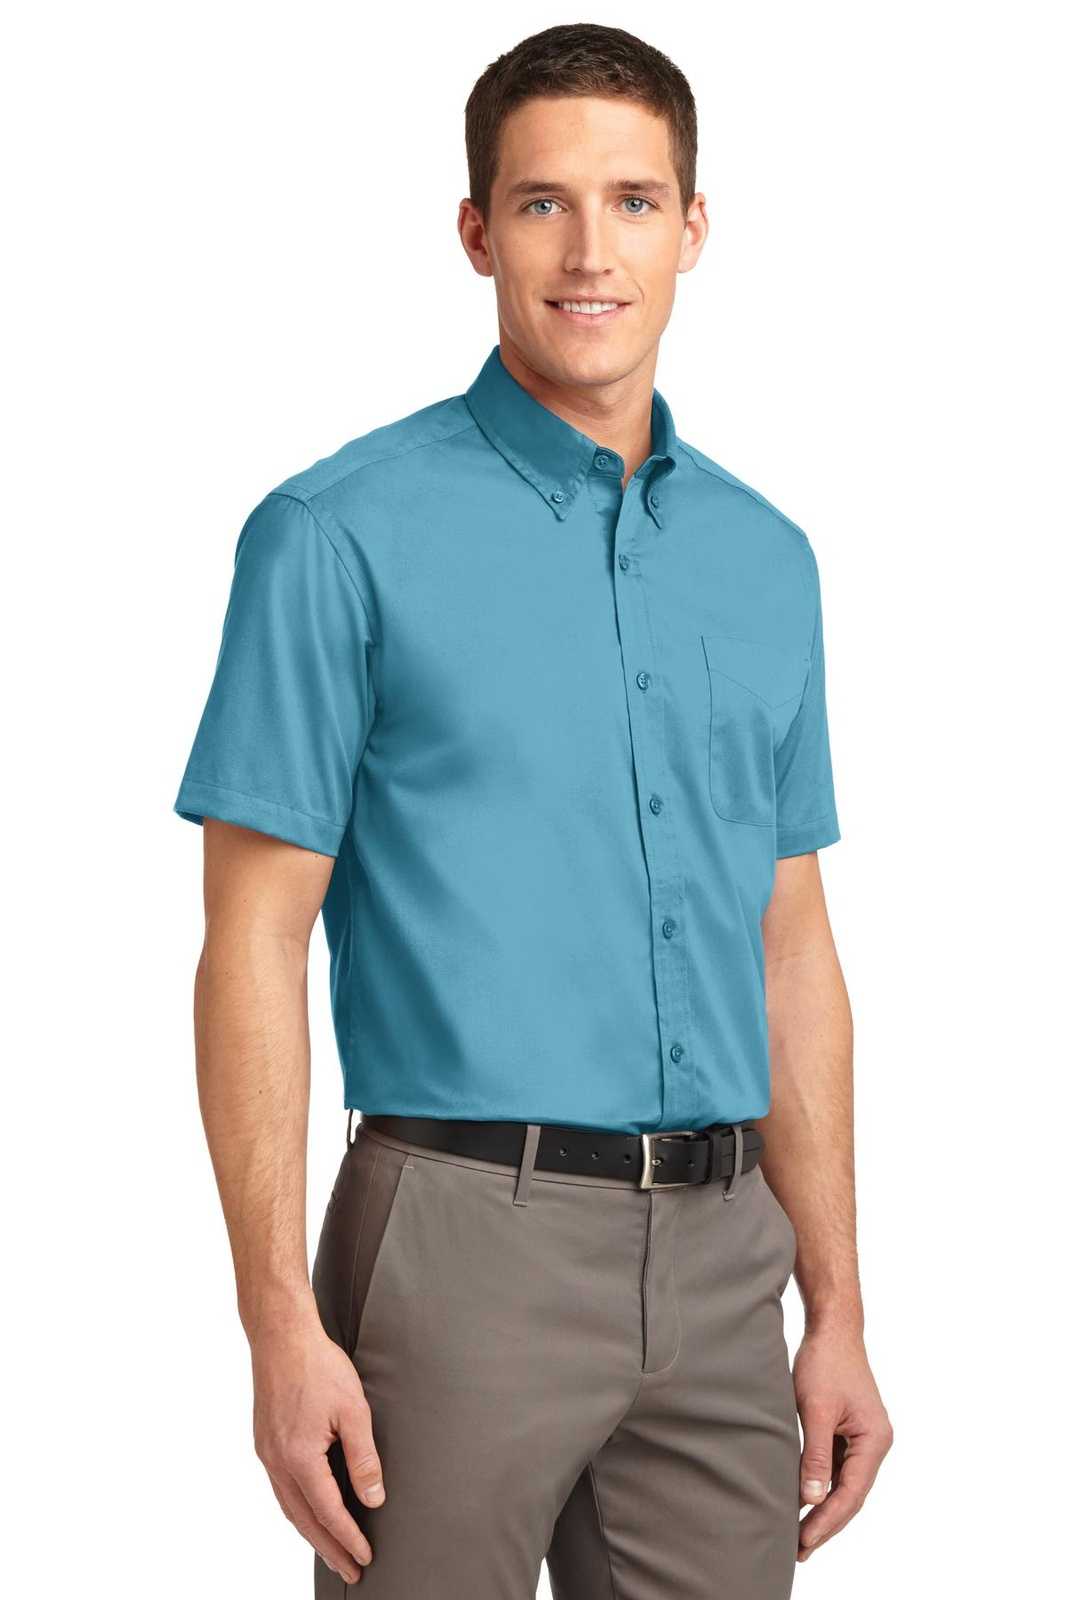 Port Authority S508 Short Sleeve Easy Care Shirt - Maui Blue - HIT a Double - 4